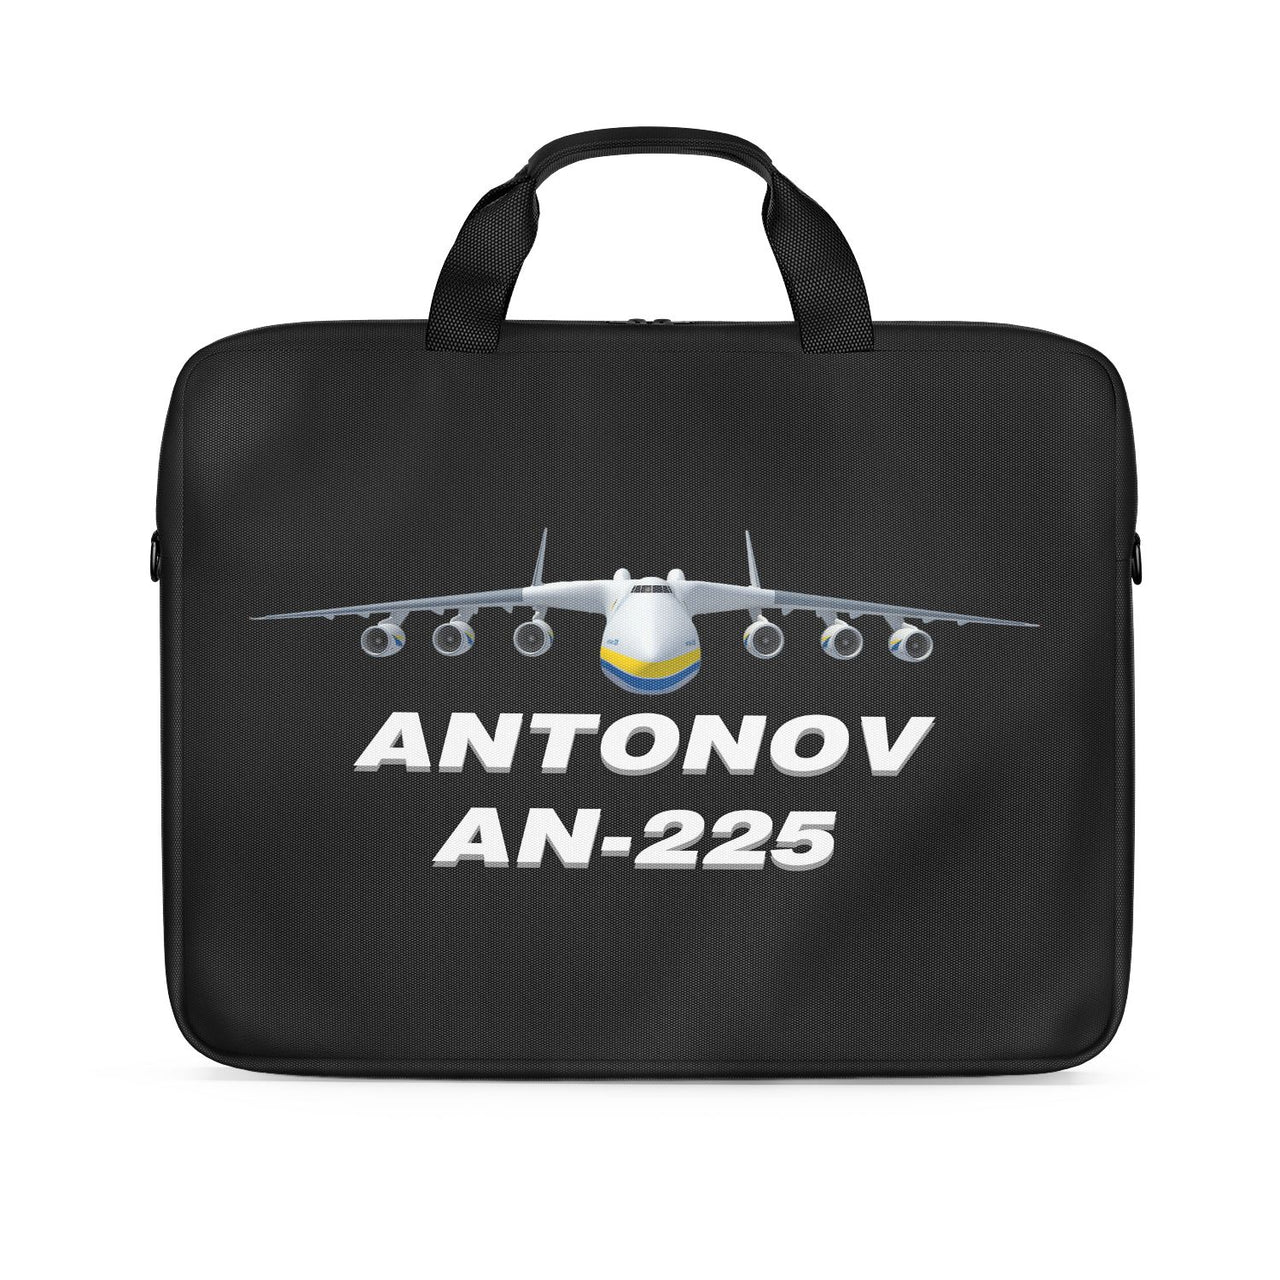 Antonov AN-225 (16) Designed Laptop & Tablet Bags